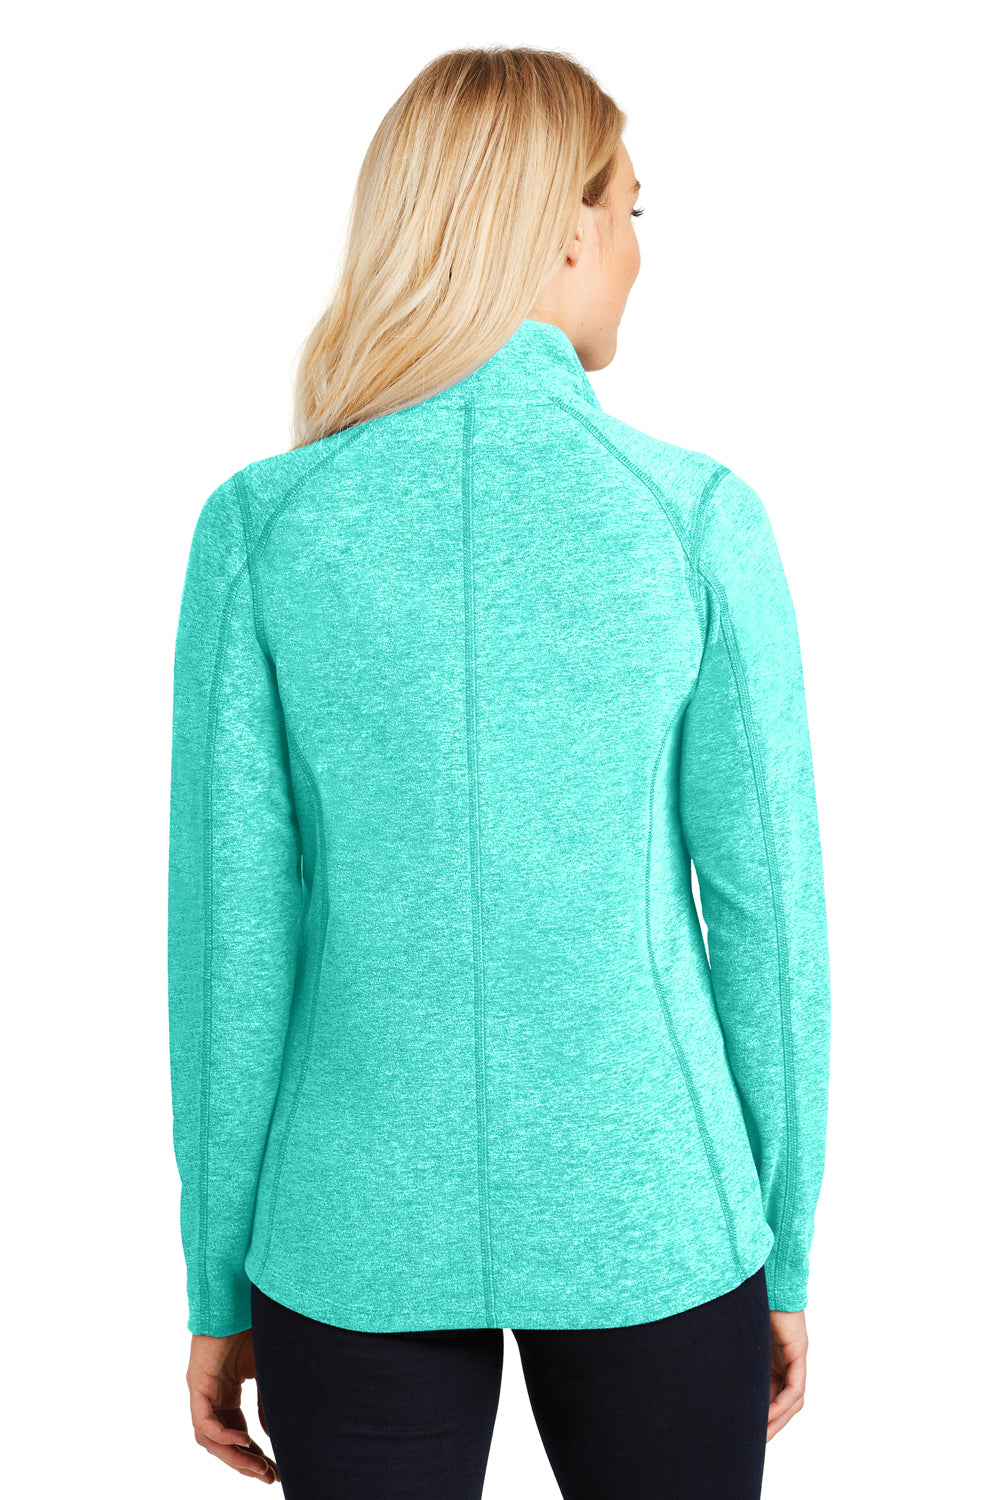 Port Authority L235 Womens Heather Microfleece Full Zip Sweatshirt Aqua Green Back